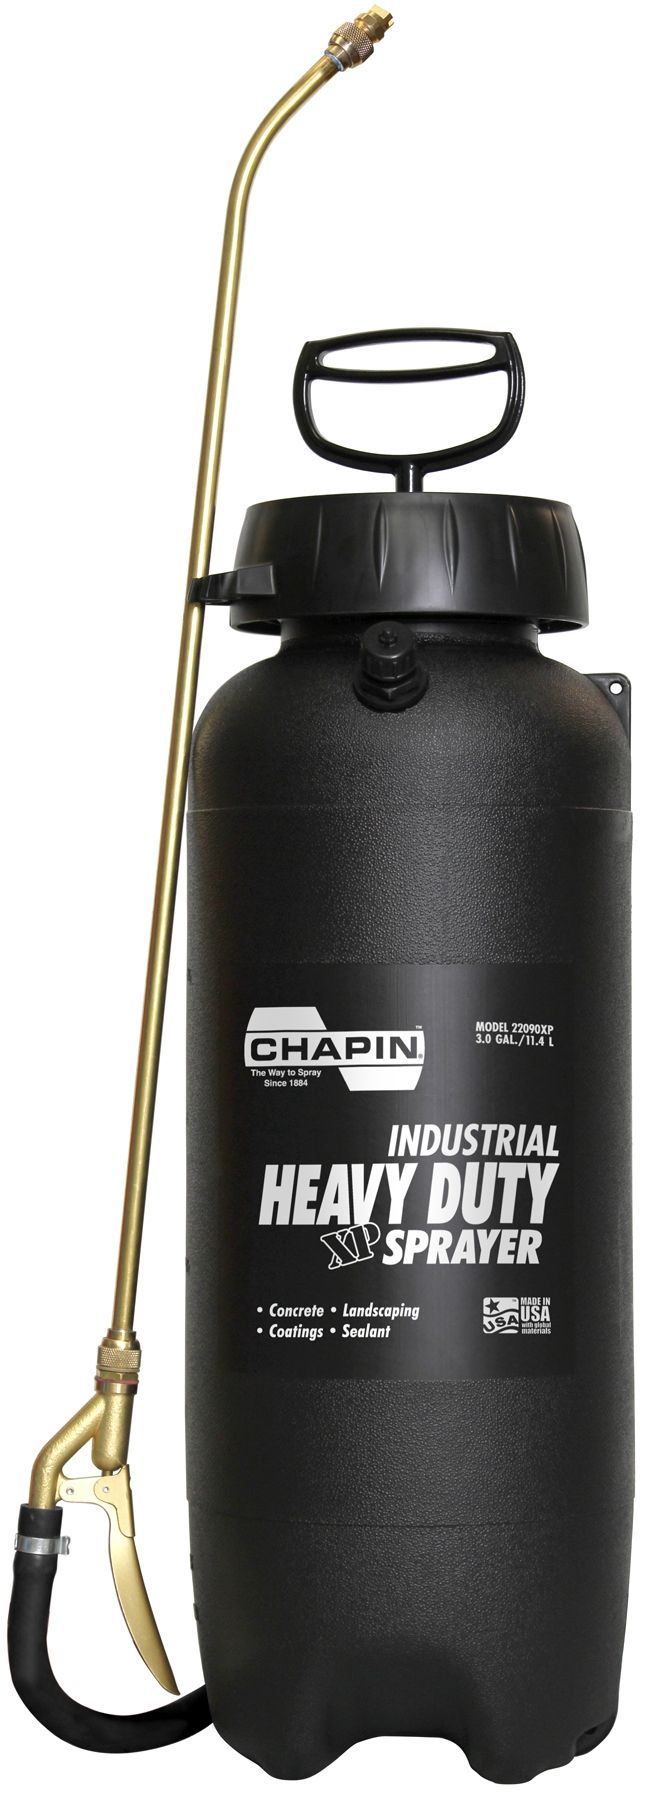 Chapin 22090XP Industrial Poly HD Sprayer - 3 Gallon